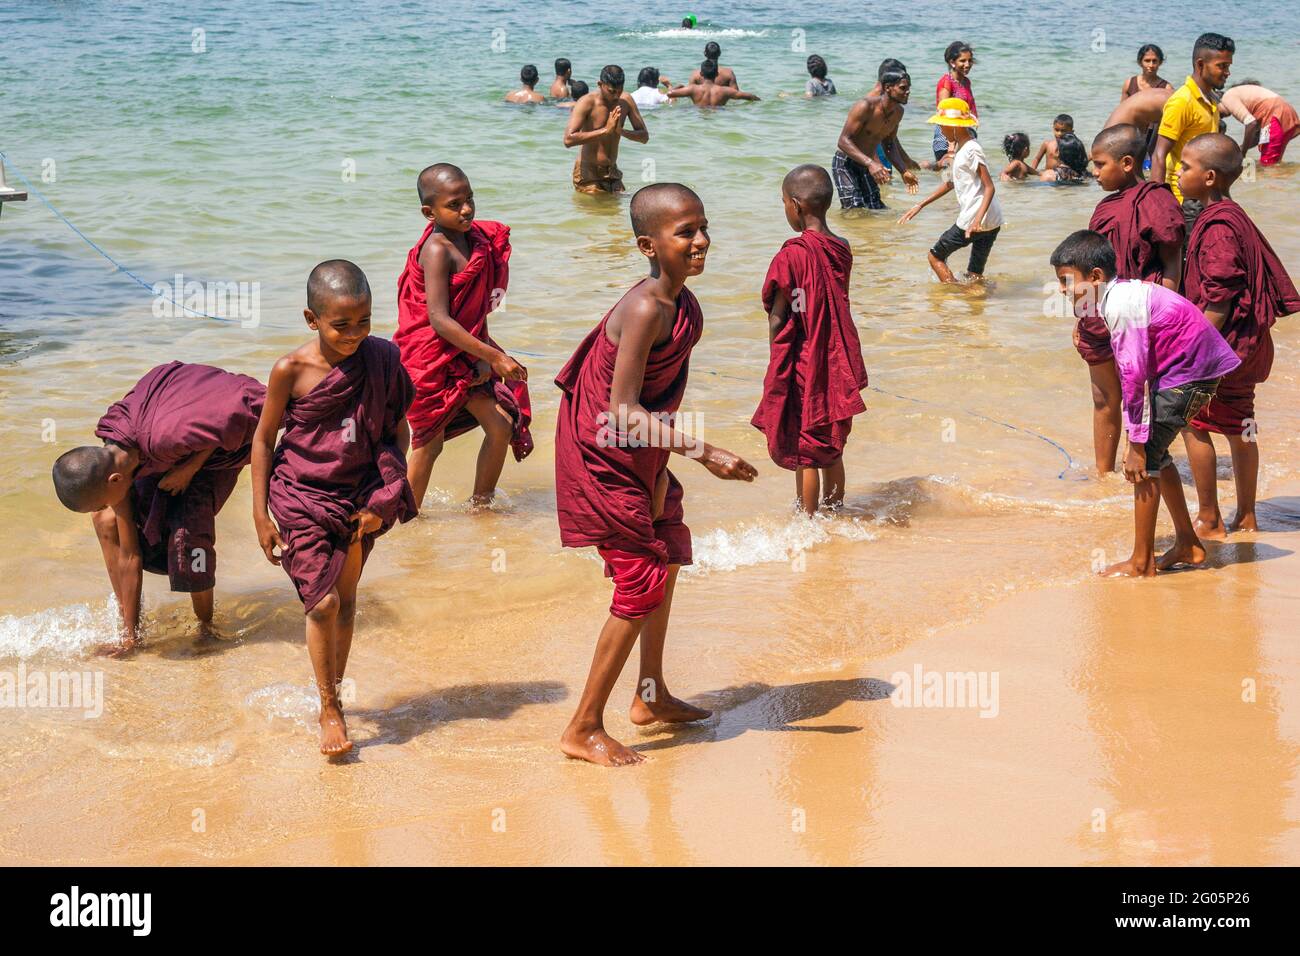 Group of young novice Buddhist monks wearing maroon robes paddling barefoot in the sea, Jungle Beach, Unawatuna, Southern province, Sri lanka Stock Photo